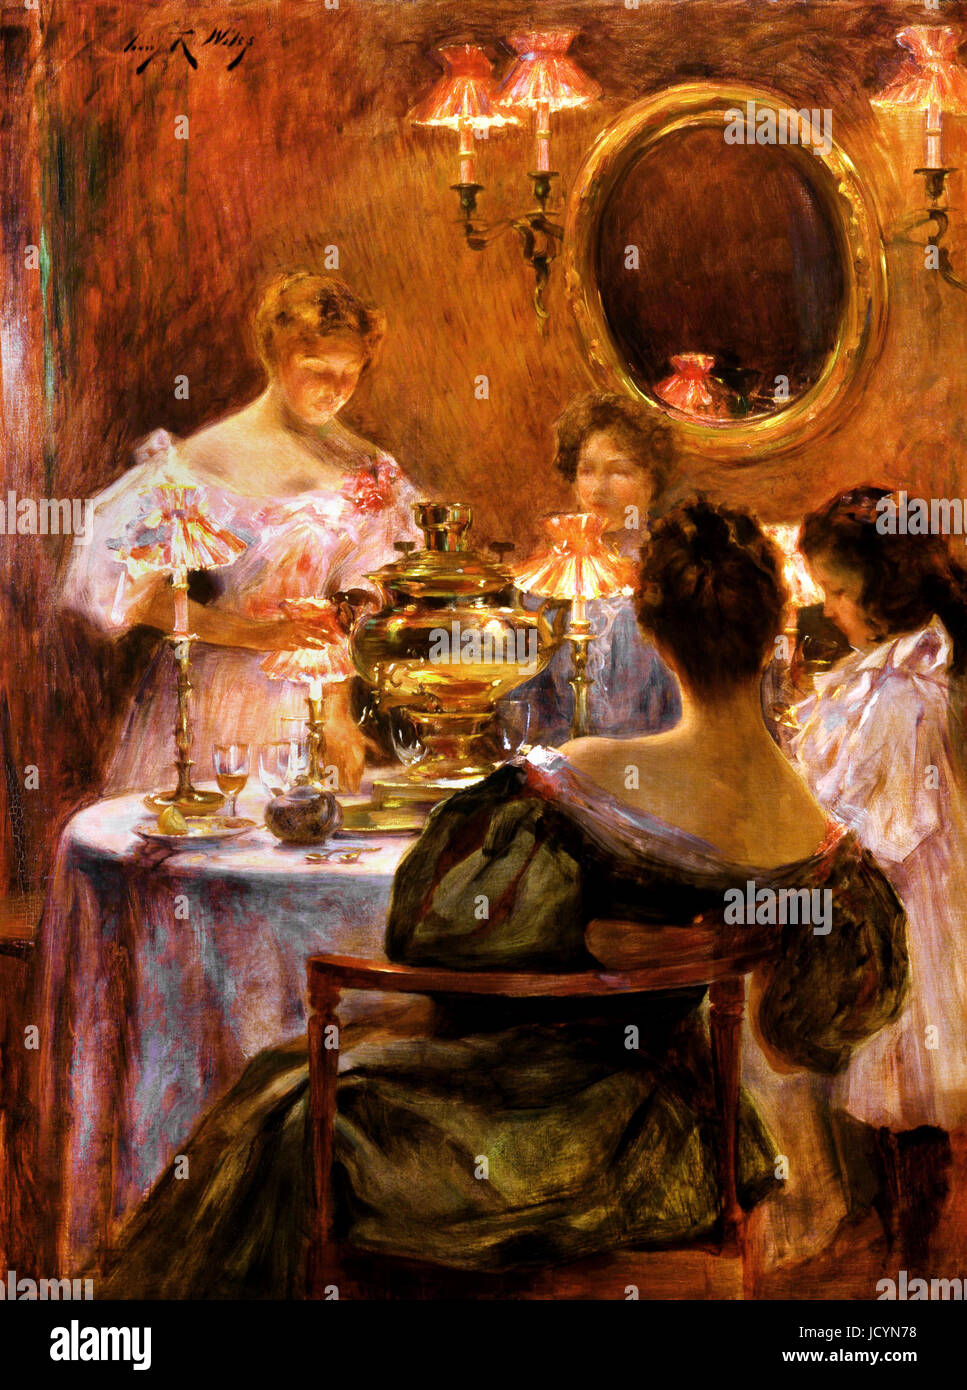 Irving R. Wiles, thé russe vers 1896. Huile sur toile. Smithsonian American Art Museum, Washington, D.C., USA. Banque D'Images